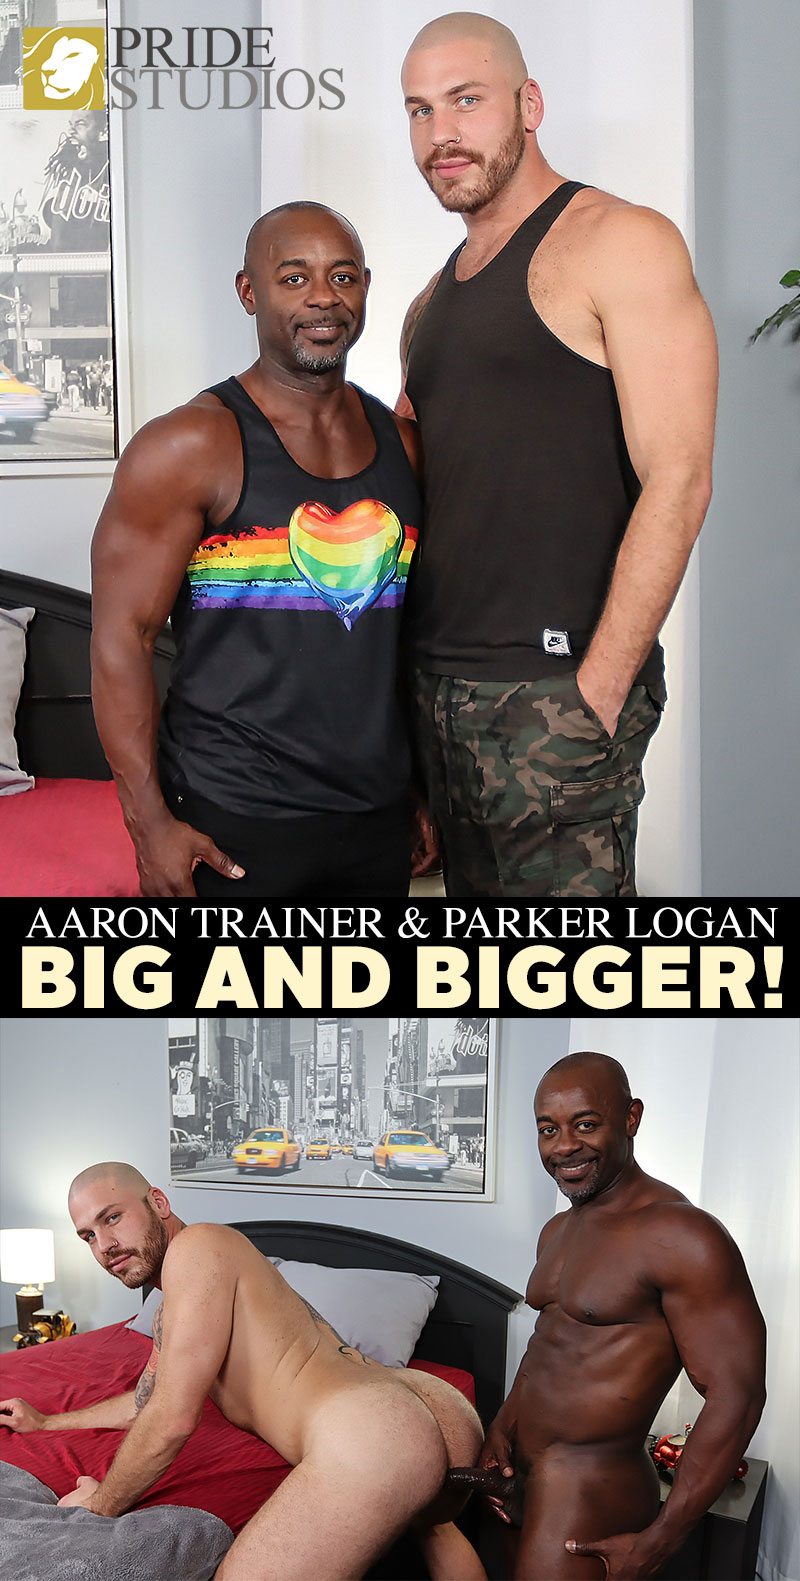 Pride Studios: Aaron Trainer fucks Parker Logan raw in "Big and Bigger!"